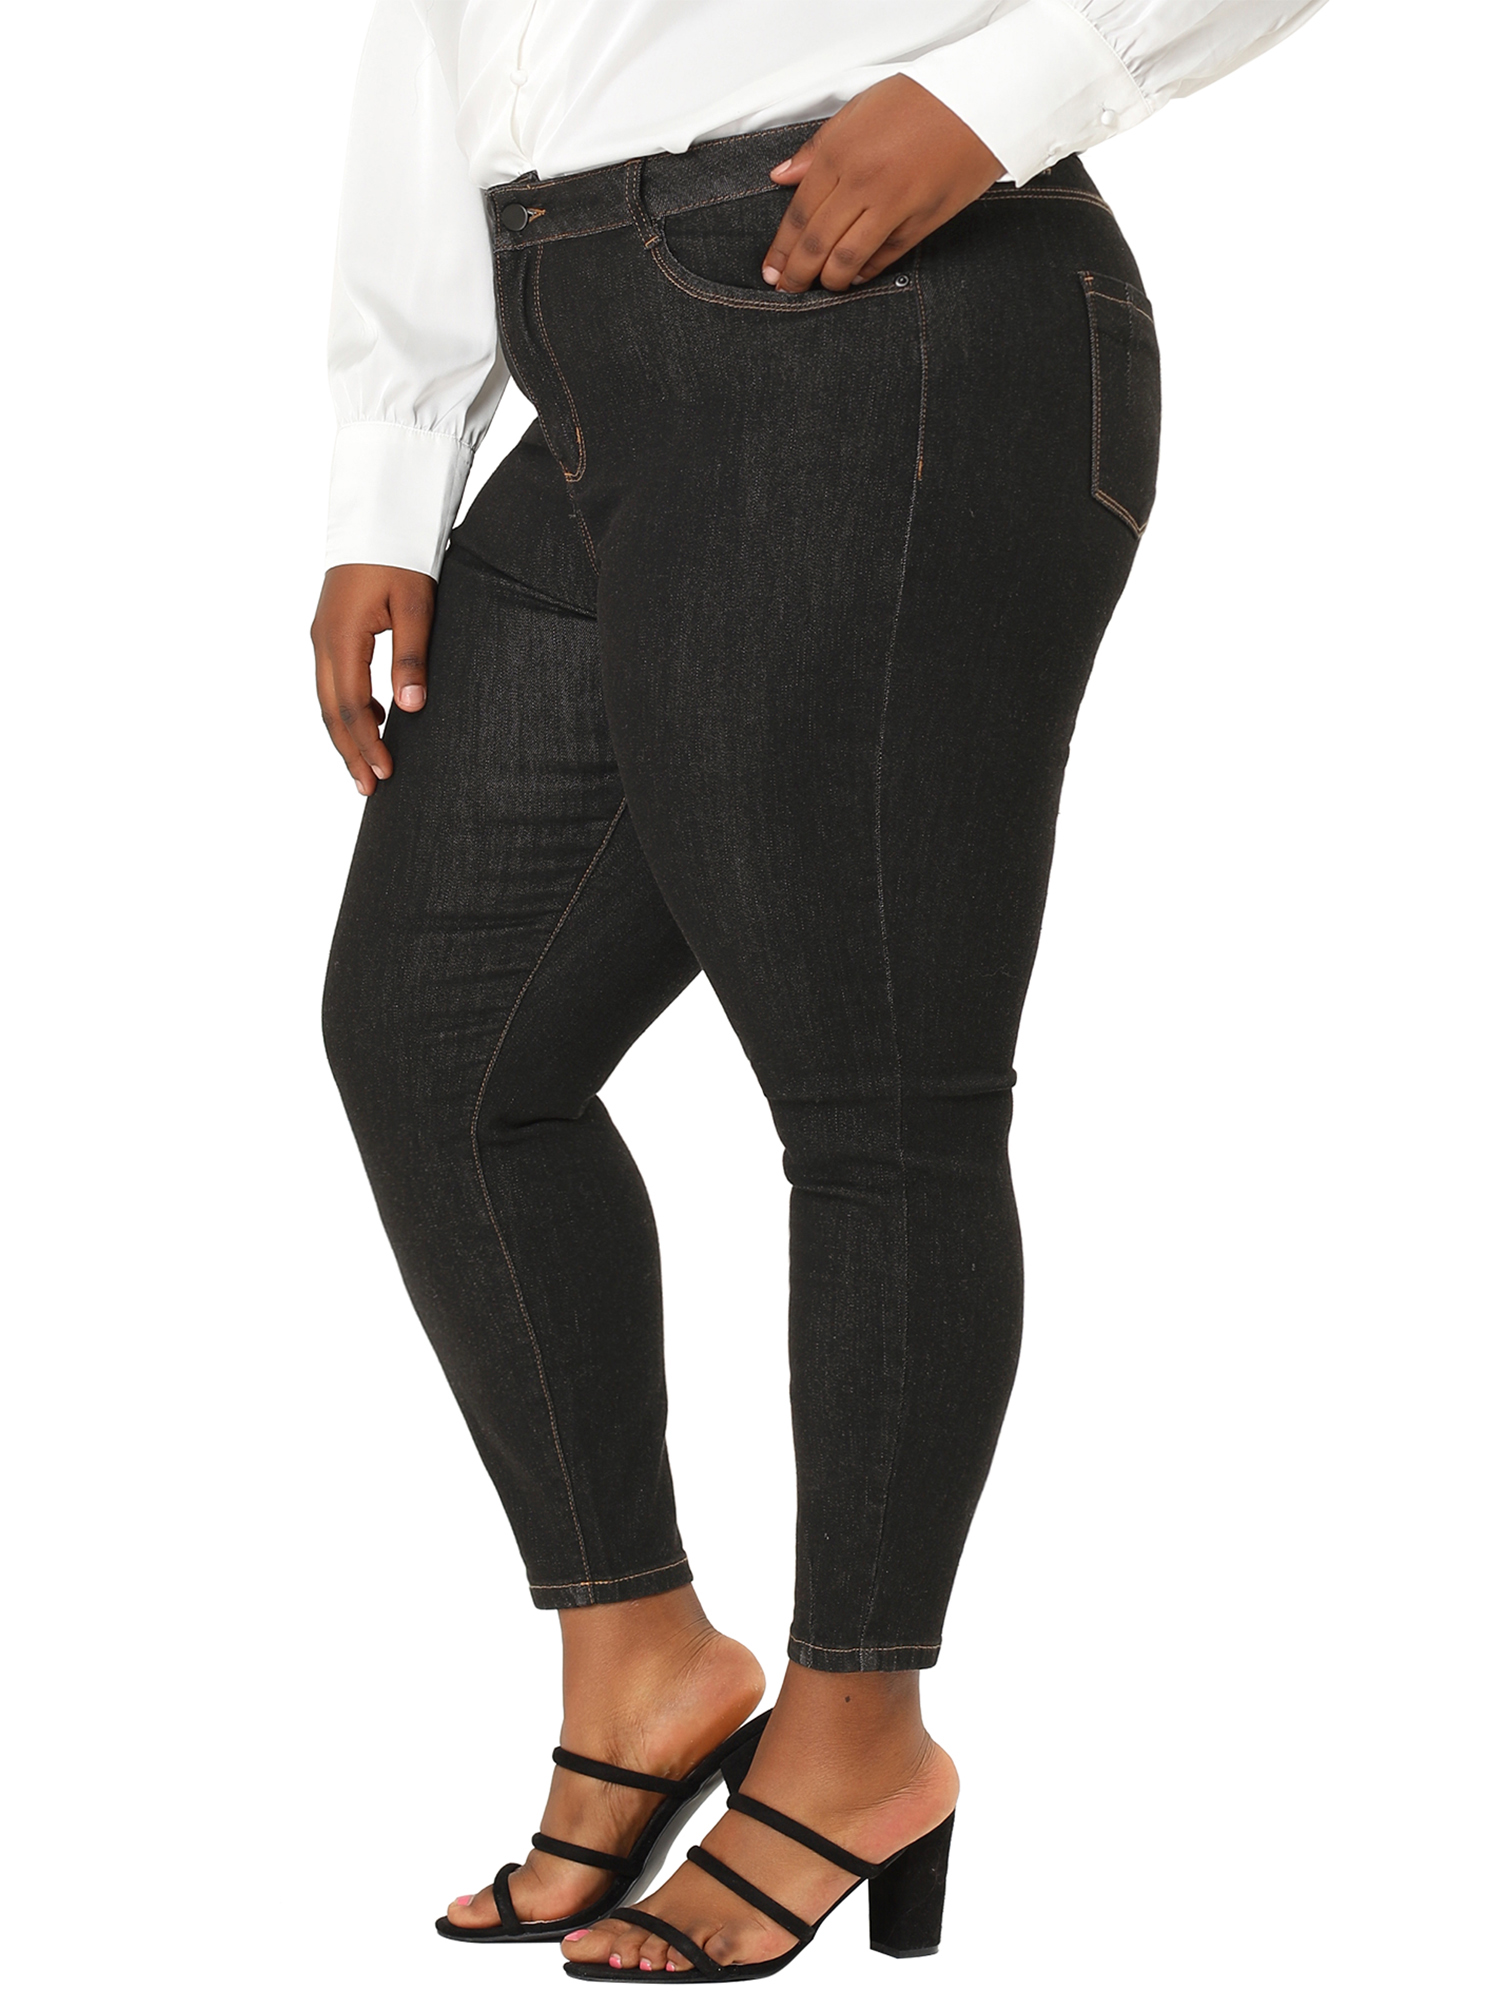 MODA NOVA Junior's Plus Size Jeans Denim Stretch Work Contrast Color Line Skinny Mid Rise Jeans Black 2X - image 4 of 5